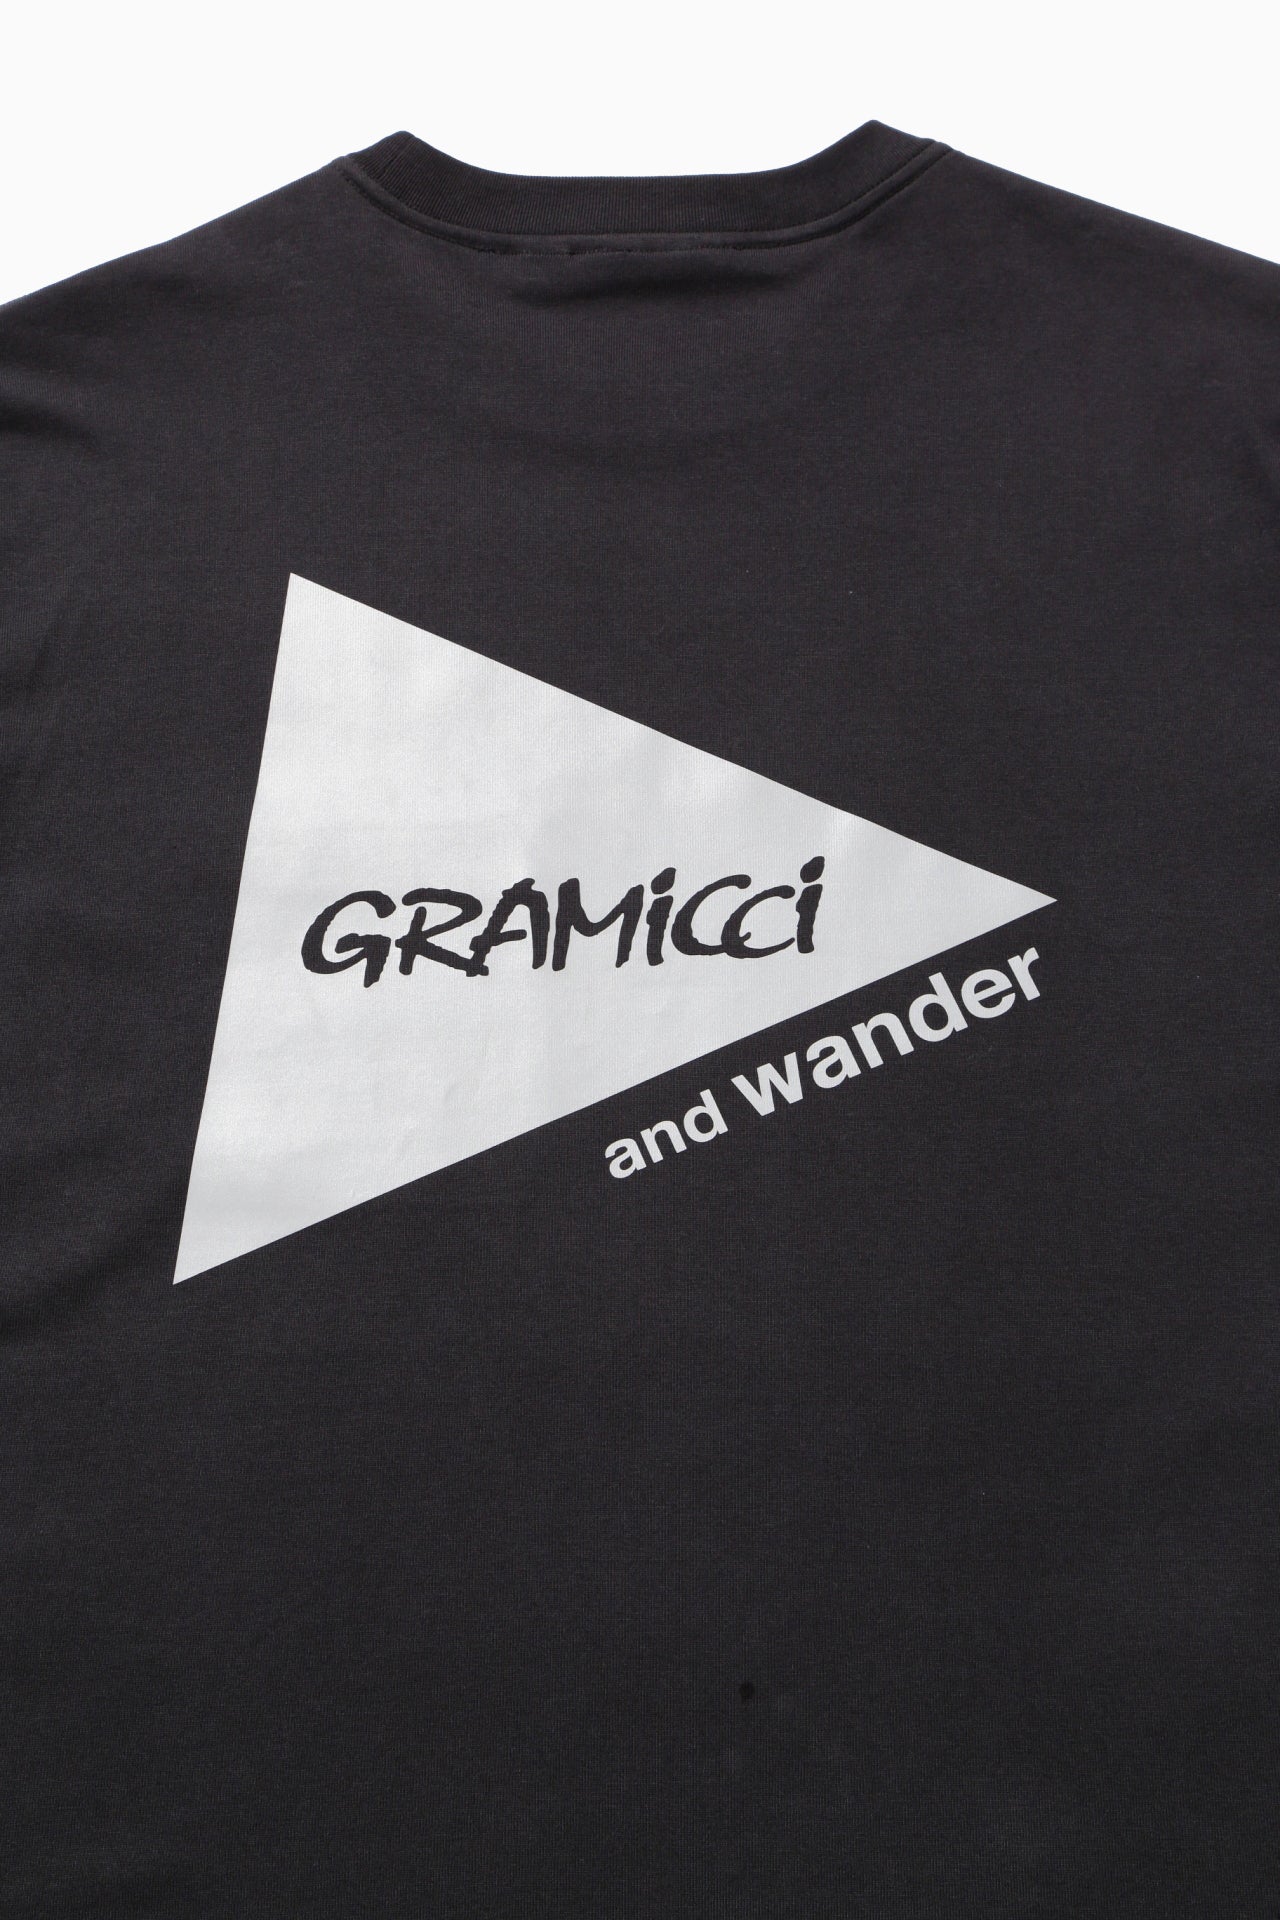 Gramicci x and wander Backprint Tee